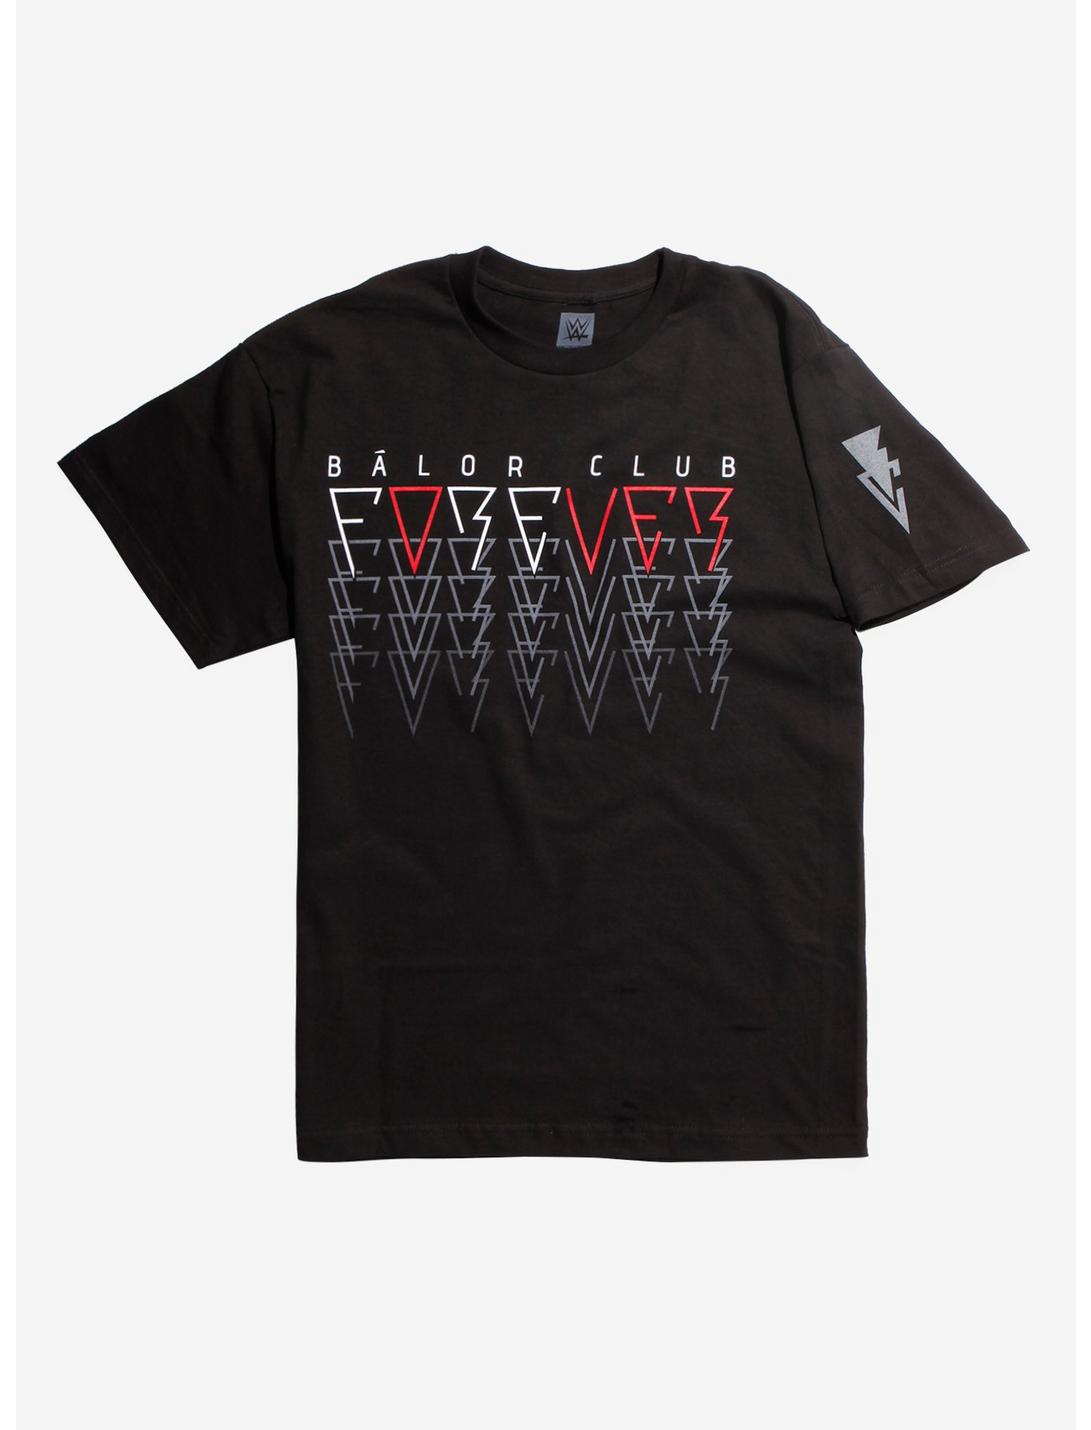 WWE Finn Bálor Bálor Club Forever T-Shirt, BLACK, hi-res